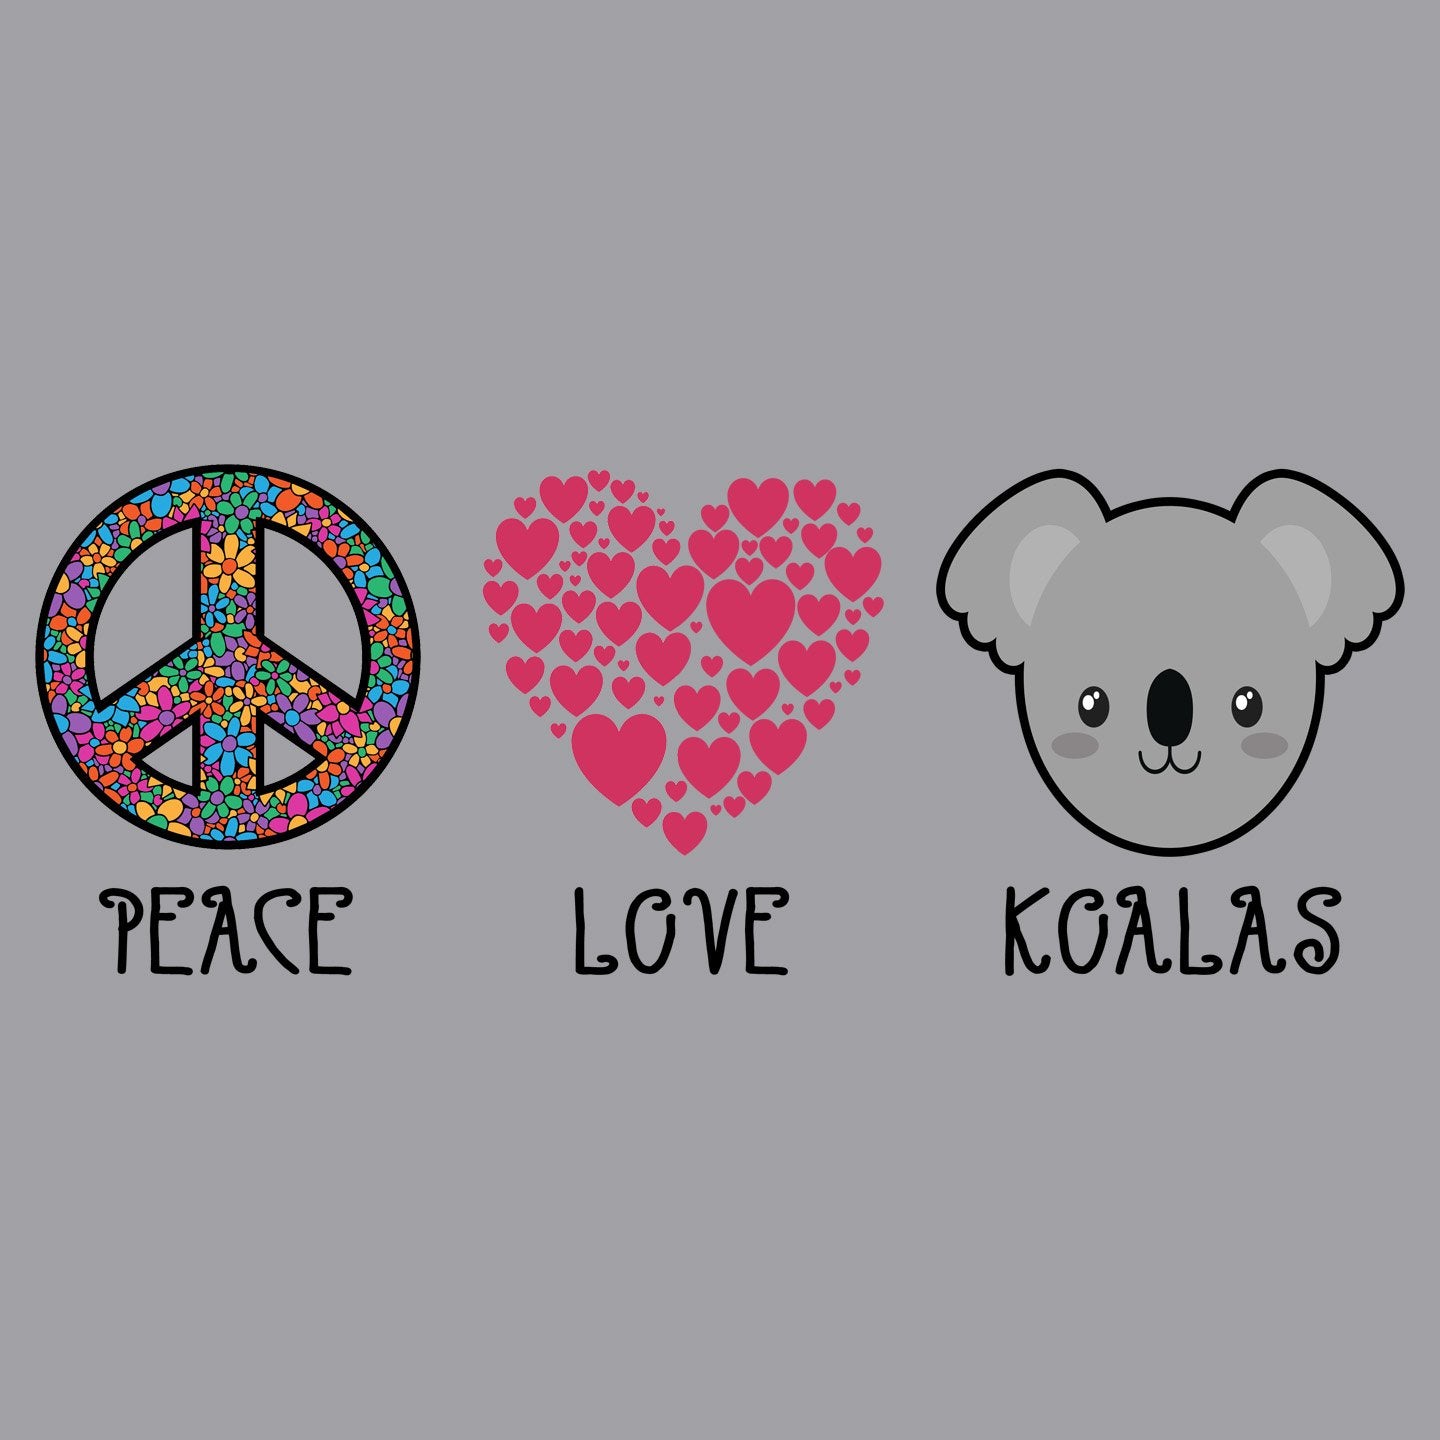 Peace Love Koala - Kids' Unisex Hoodie Sweatshirt